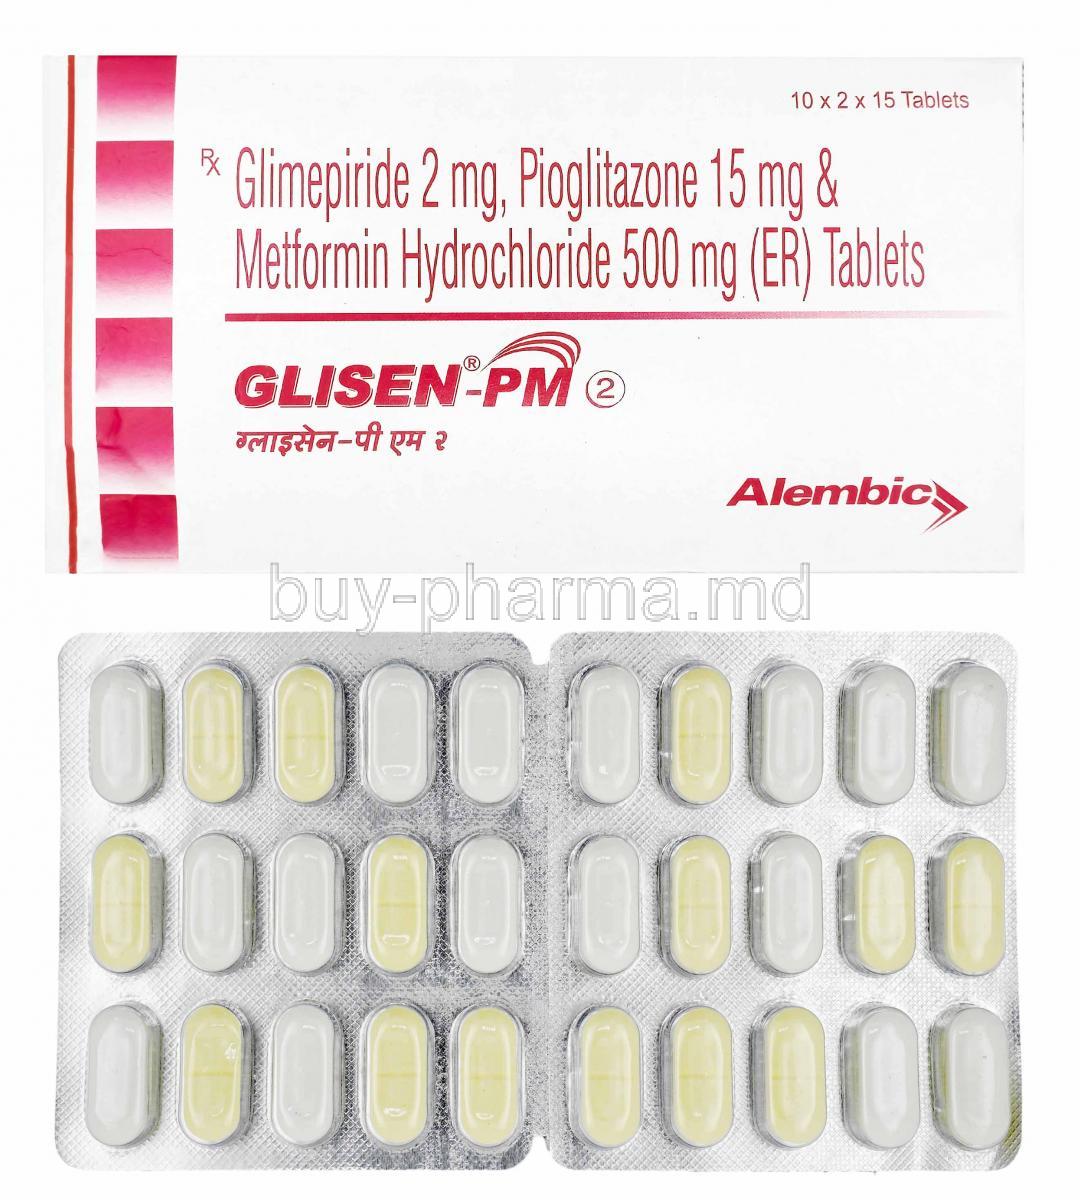 Glisen-PM, Glimepiride, Metformin and Pioglitazone 2mg box and tablets